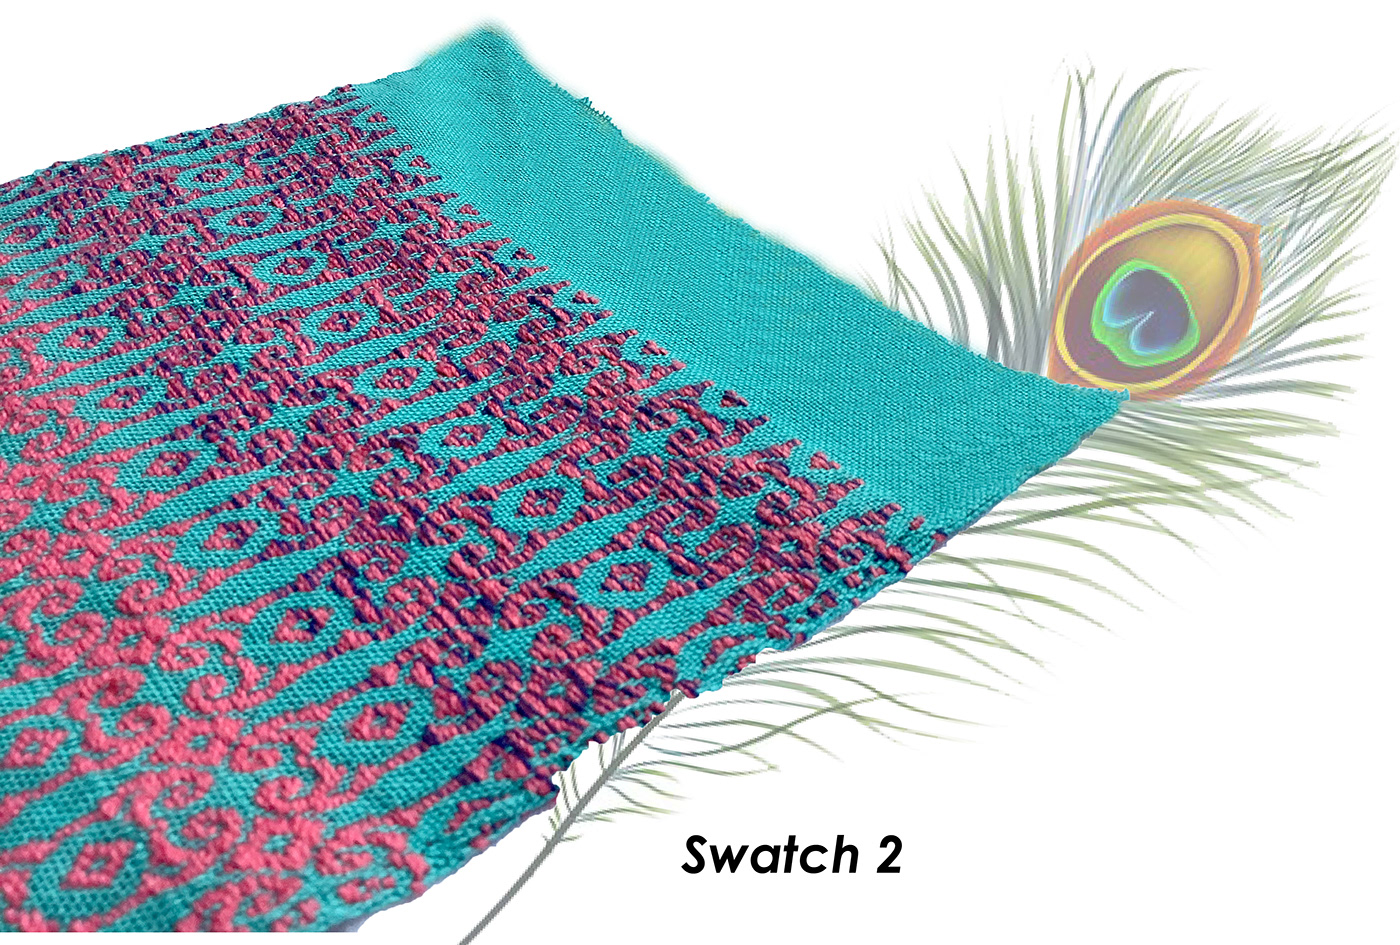 Extra weft Weaving textile design  Fashion  textile fabric handloom weaving weave Extra Weft Technique Handweaving